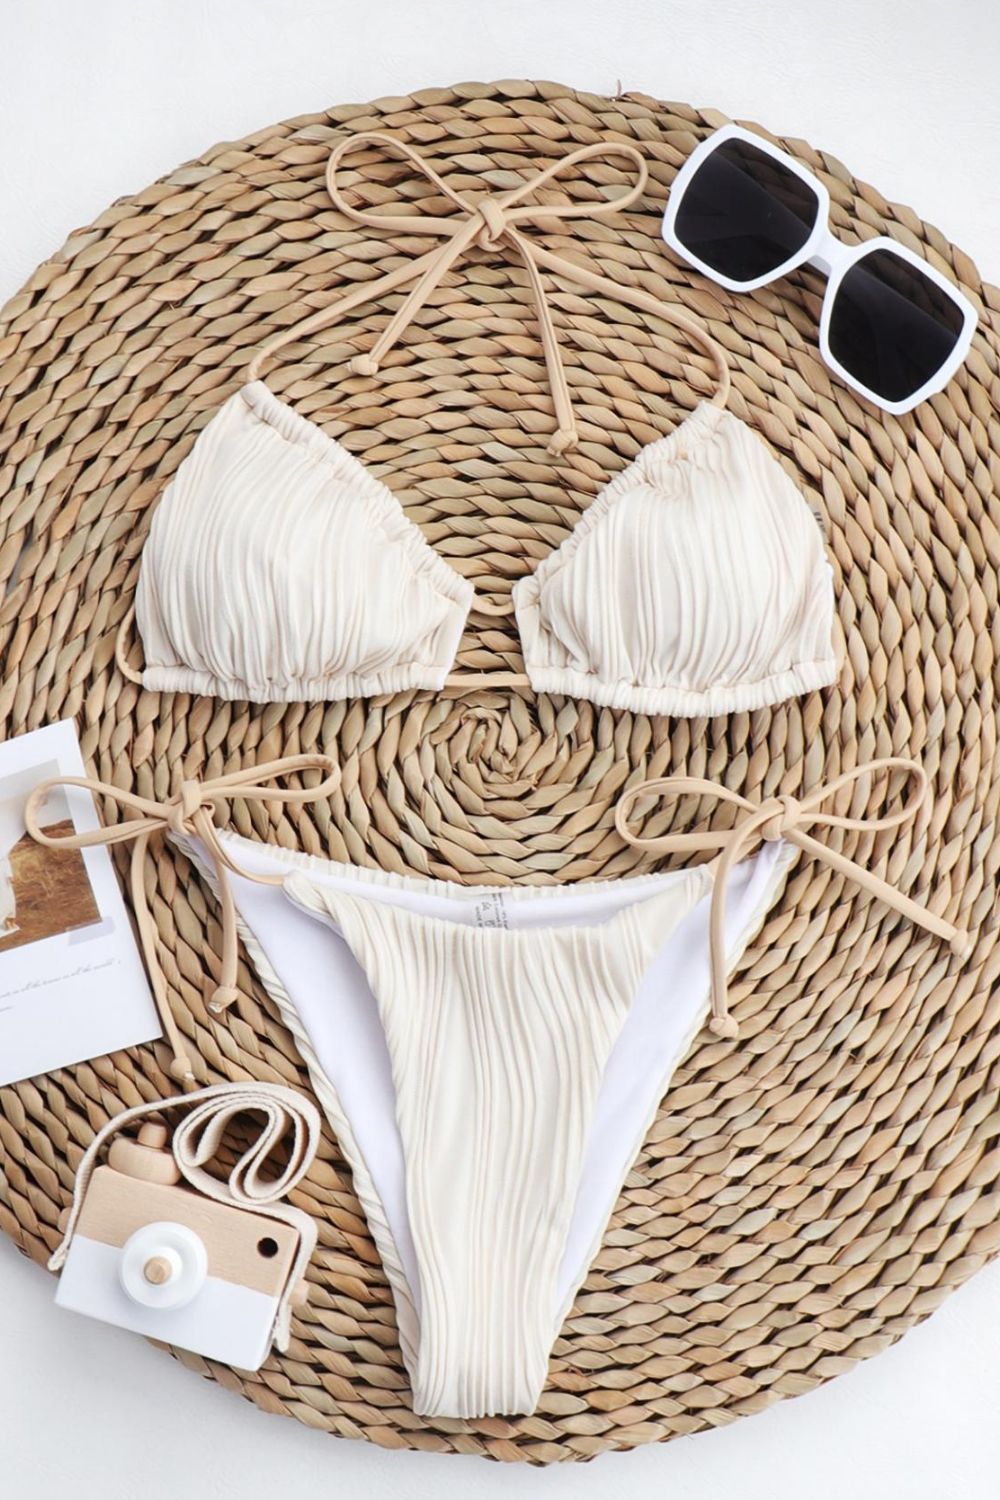 a woman's bikini top and sunglasses on a wicker mat